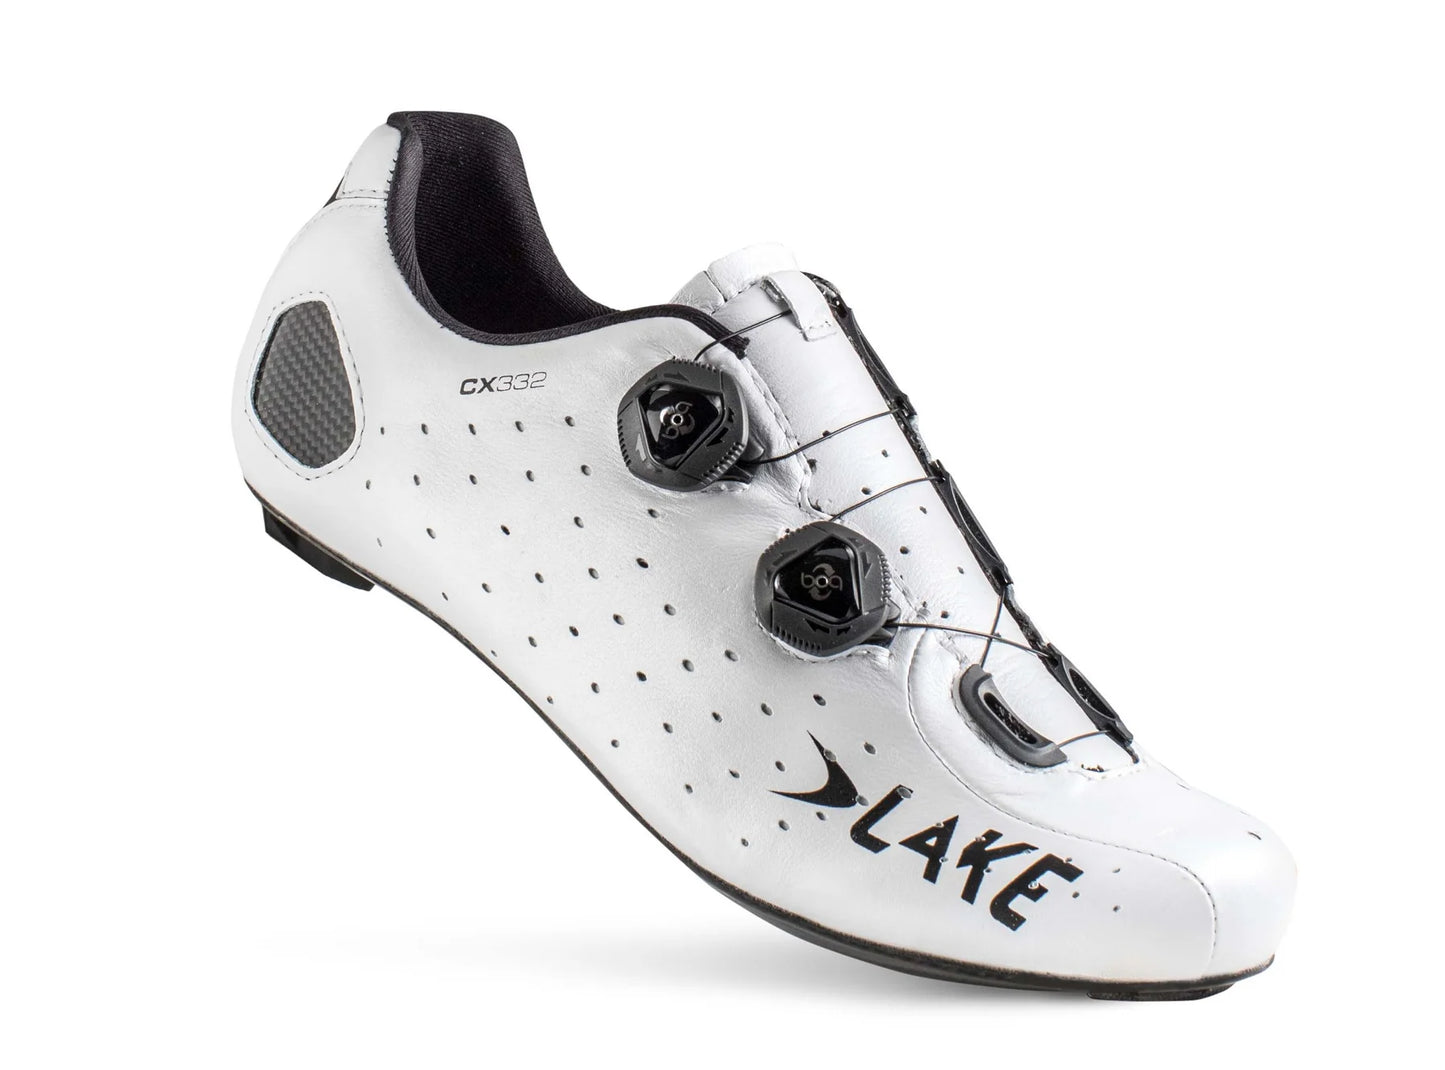 Lake CX332 Road Cycling Shoes